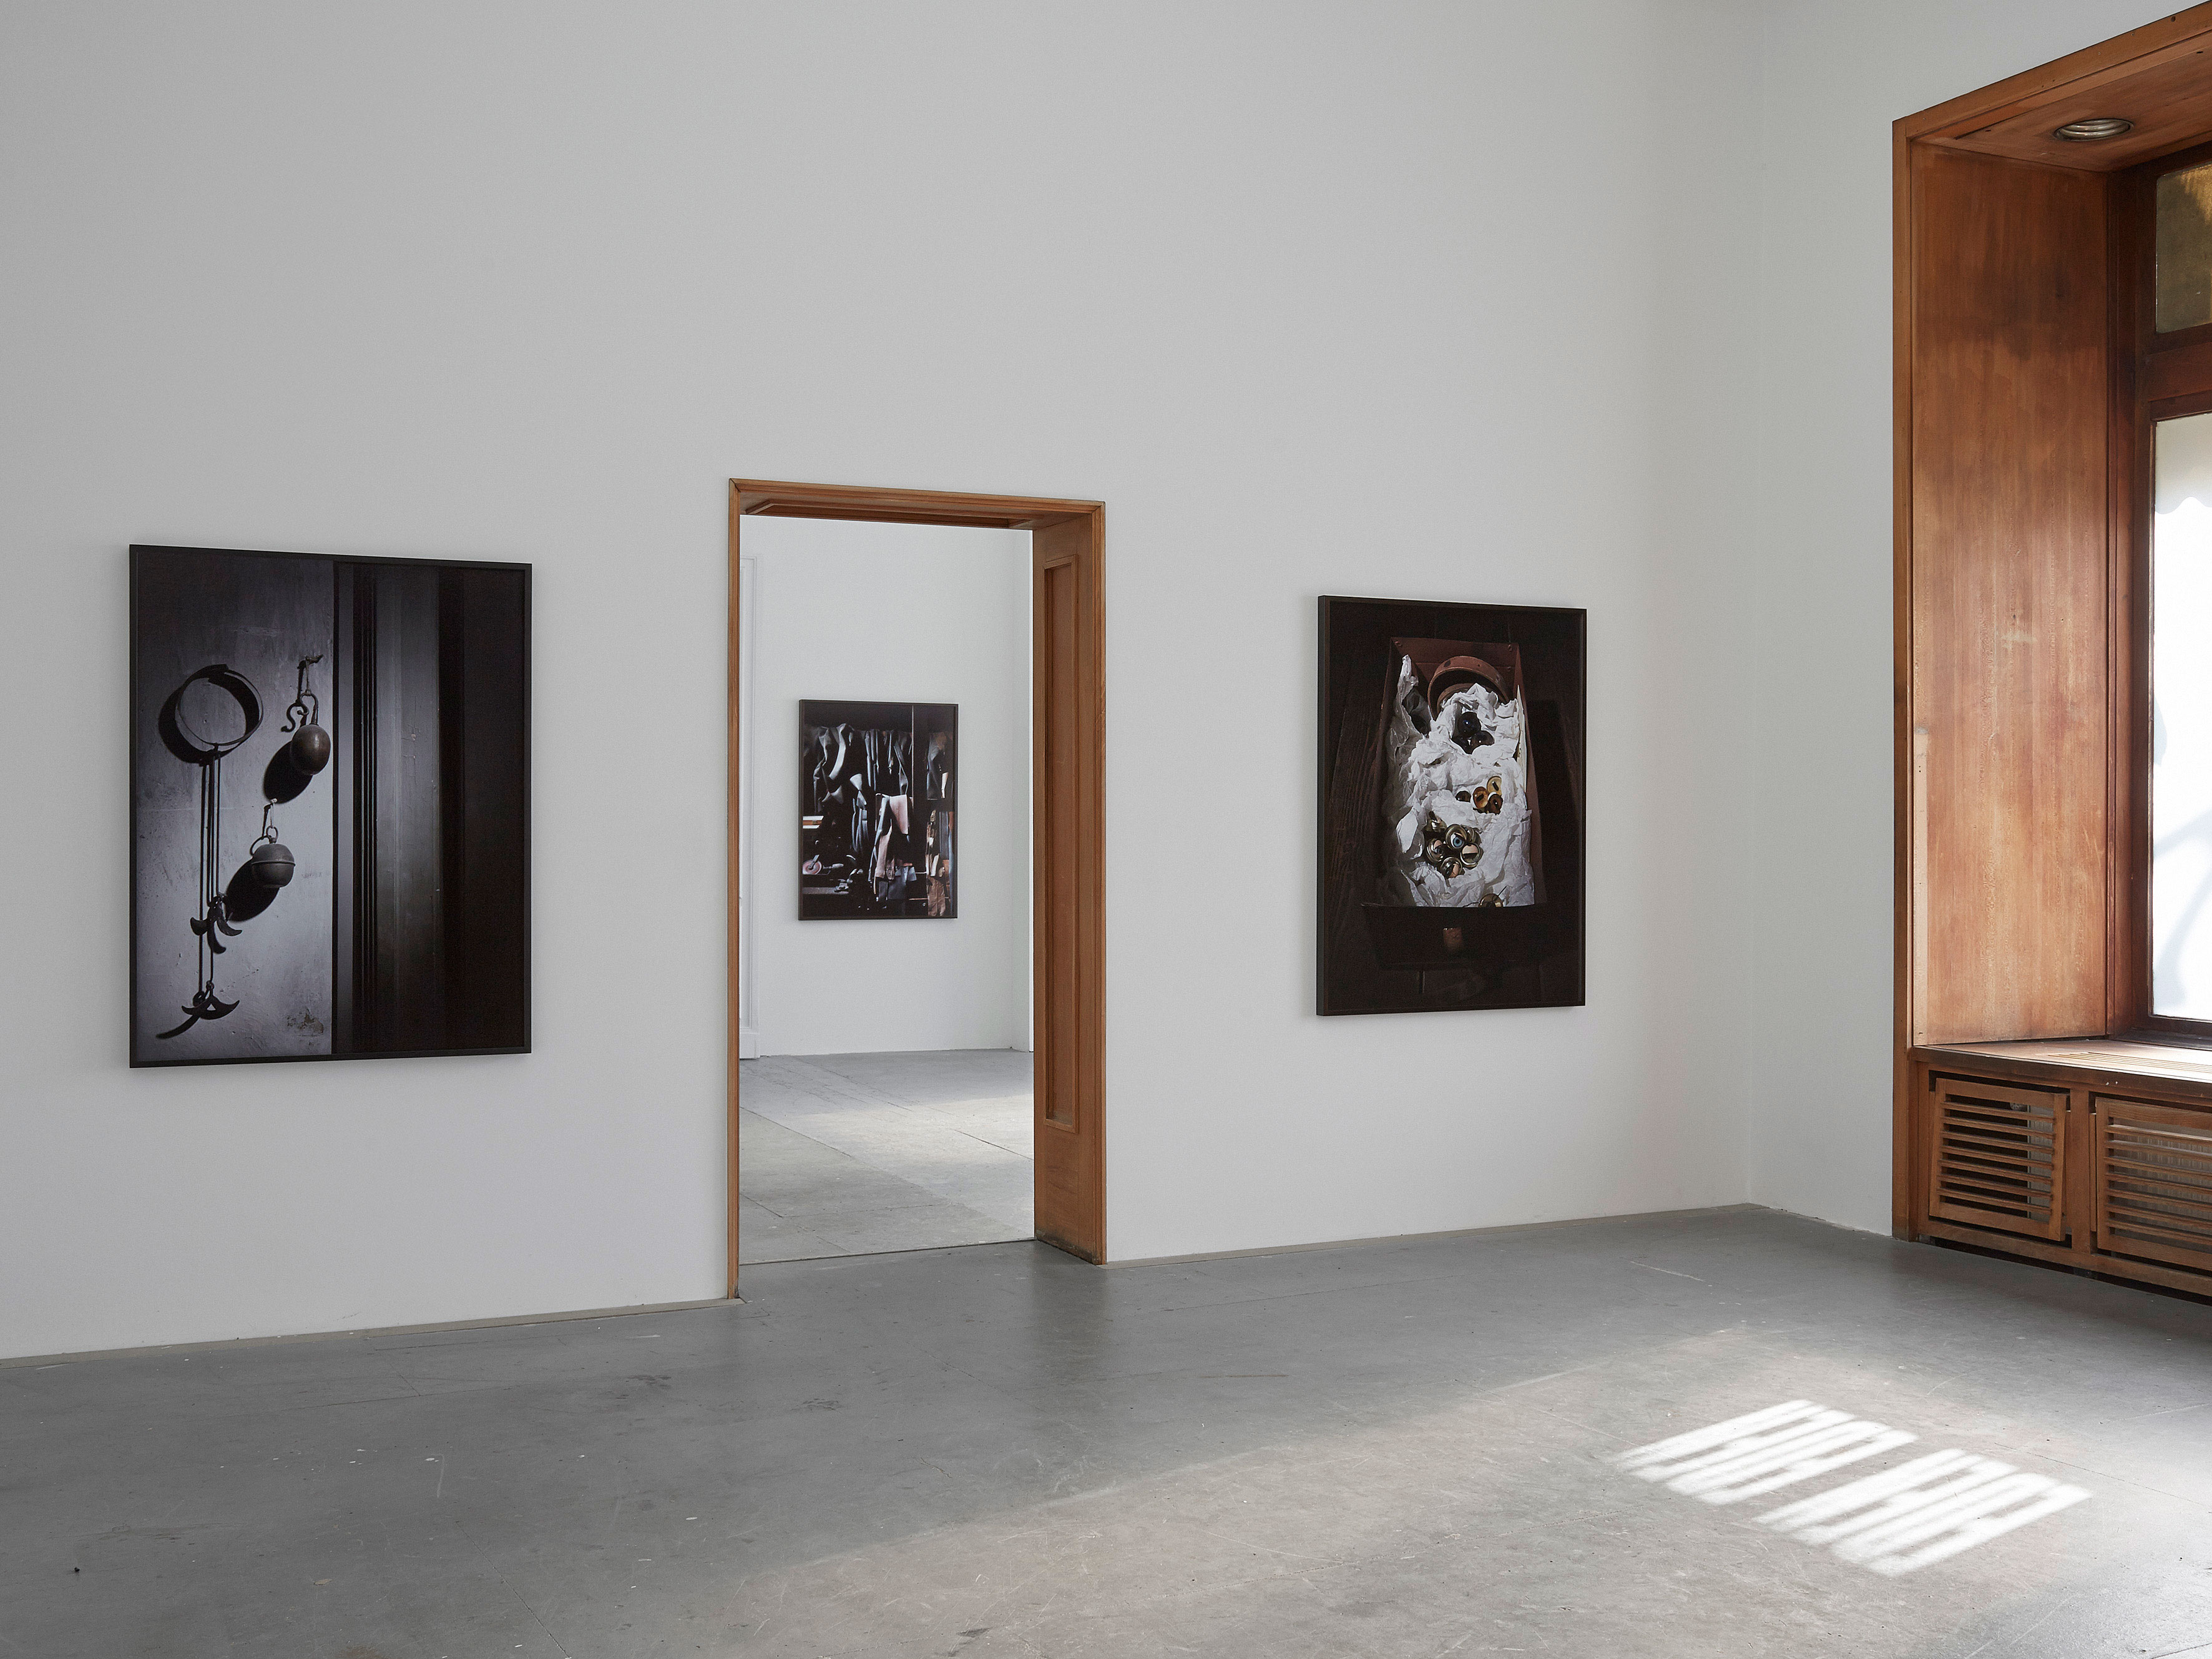 View of the exhibition "Inside Carol Rama" - photograph courtesy of Galerie Isabella Borto